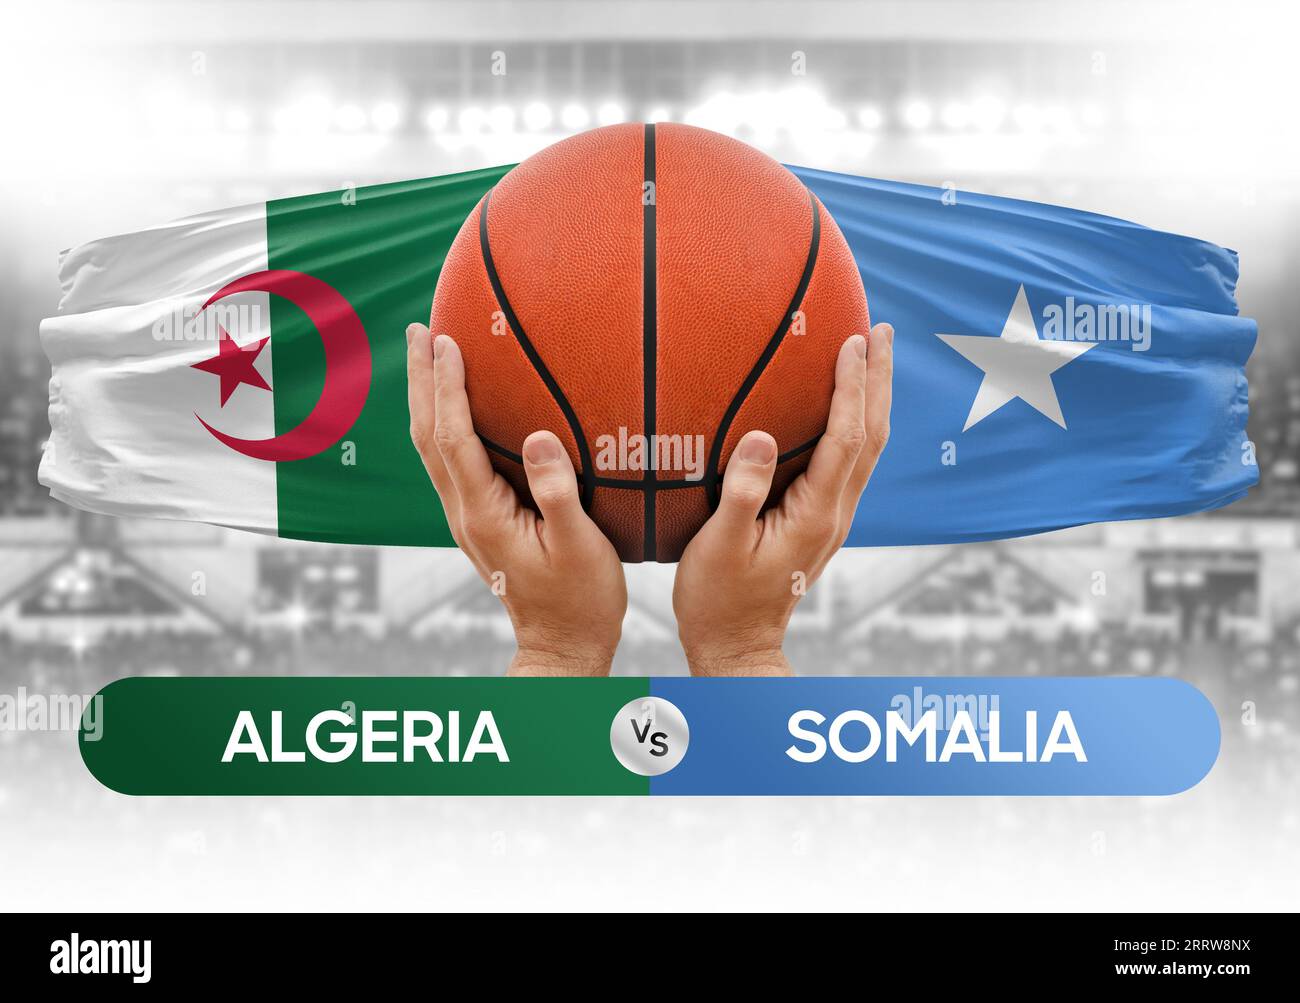 Algeria vs Somalia national basketball teams basket ball match competition  cup concept image Stock Photo - Alamy